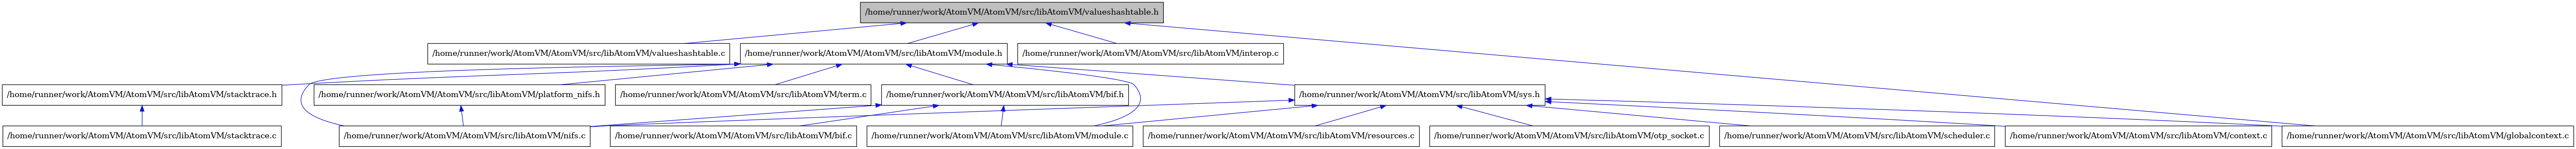 digraph {
    graph [bgcolor="#00000000"]
    node [shape=rectangle style=filled fillcolor="#FFFFFF" font=Helvetica padding=2]
    edge [color="#1414CE"]
    "6" [label="/home/runner/work/AtomVM/AtomVM/src/libAtomVM/bif.c" tooltip="/home/runner/work/AtomVM/AtomVM/src/libAtomVM/bif.c"]
    "5" [label="/home/runner/work/AtomVM/AtomVM/src/libAtomVM/bif.h" tooltip="/home/runner/work/AtomVM/AtomVM/src/libAtomVM/bif.h"]
    "9" [label="/home/runner/work/AtomVM/AtomVM/src/libAtomVM/platform_nifs.h" tooltip="/home/runner/work/AtomVM/AtomVM/src/libAtomVM/platform_nifs.h"]
    "18" [label="/home/runner/work/AtomVM/AtomVM/src/libAtomVM/valueshashtable.c" tooltip="/home/runner/work/AtomVM/AtomVM/src/libAtomVM/valueshashtable.c"]
    "1" [label="/home/runner/work/AtomVM/AtomVM/src/libAtomVM/valueshashtable.h" tooltip="/home/runner/work/AtomVM/AtomVM/src/libAtomVM/valueshashtable.h" fillcolor="#BFBFBF"]
    "16" [label="/home/runner/work/AtomVM/AtomVM/src/libAtomVM/scheduler.c" tooltip="/home/runner/work/AtomVM/AtomVM/src/libAtomVM/scheduler.c"]
    "13" [label="/home/runner/work/AtomVM/AtomVM/src/libAtomVM/context.c" tooltip="/home/runner/work/AtomVM/AtomVM/src/libAtomVM/context.c"]
    "11" [label="/home/runner/work/AtomVM/AtomVM/src/libAtomVM/stacktrace.c" tooltip="/home/runner/work/AtomVM/AtomVM/src/libAtomVM/stacktrace.c"]
    "10" [label="/home/runner/work/AtomVM/AtomVM/src/libAtomVM/stacktrace.h" tooltip="/home/runner/work/AtomVM/AtomVM/src/libAtomVM/stacktrace.h"]
    "7" [label="/home/runner/work/AtomVM/AtomVM/src/libAtomVM/module.c" tooltip="/home/runner/work/AtomVM/AtomVM/src/libAtomVM/module.c"]
    "4" [label="/home/runner/work/AtomVM/AtomVM/src/libAtomVM/module.h" tooltip="/home/runner/work/AtomVM/AtomVM/src/libAtomVM/module.h"]
    "17" [label="/home/runner/work/AtomVM/AtomVM/src/libAtomVM/term.c" tooltip="/home/runner/work/AtomVM/AtomVM/src/libAtomVM/term.c"]
    "3" [label="/home/runner/work/AtomVM/AtomVM/src/libAtomVM/interop.c" tooltip="/home/runner/work/AtomVM/AtomVM/src/libAtomVM/interop.c"]
    "15" [label="/home/runner/work/AtomVM/AtomVM/src/libAtomVM/resources.c" tooltip="/home/runner/work/AtomVM/AtomVM/src/libAtomVM/resources.c"]
    "12" [label="/home/runner/work/AtomVM/AtomVM/src/libAtomVM/sys.h" tooltip="/home/runner/work/AtomVM/AtomVM/src/libAtomVM/sys.h"]
    "8" [label="/home/runner/work/AtomVM/AtomVM/src/libAtomVM/nifs.c" tooltip="/home/runner/work/AtomVM/AtomVM/src/libAtomVM/nifs.c"]
    "2" [label="/home/runner/work/AtomVM/AtomVM/src/libAtomVM/globalcontext.c" tooltip="/home/runner/work/AtomVM/AtomVM/src/libAtomVM/globalcontext.c"]
    "14" [label="/home/runner/work/AtomVM/AtomVM/src/libAtomVM/otp_socket.c" tooltip="/home/runner/work/AtomVM/AtomVM/src/libAtomVM/otp_socket.c"]
    "5" -> "6" [dir=back tooltip="include"]
    "5" -> "7" [dir=back tooltip="include"]
    "5" -> "8" [dir=back tooltip="include"]
    "9" -> "8" [dir=back tooltip="include"]
    "1" -> "2" [dir=back tooltip="include"]
    "1" -> "3" [dir=back tooltip="include"]
    "1" -> "4" [dir=back tooltip="include"]
    "1" -> "18" [dir=back tooltip="include"]
    "10" -> "11" [dir=back tooltip="include"]
    "4" -> "5" [dir=back tooltip="include"]
    "4" -> "7" [dir=back tooltip="include"]
    "4" -> "8" [dir=back tooltip="include"]
    "4" -> "9" [dir=back tooltip="include"]
    "4" -> "10" [dir=back tooltip="include"]
    "4" -> "12" [dir=back tooltip="include"]
    "4" -> "17" [dir=back tooltip="include"]
    "12" -> "13" [dir=back tooltip="include"]
    "12" -> "2" [dir=back tooltip="include"]
    "12" -> "7" [dir=back tooltip="include"]
    "12" -> "8" [dir=back tooltip="include"]
    "12" -> "14" [dir=back tooltip="include"]
    "12" -> "15" [dir=back tooltip="include"]
    "12" -> "16" [dir=back tooltip="include"]
}